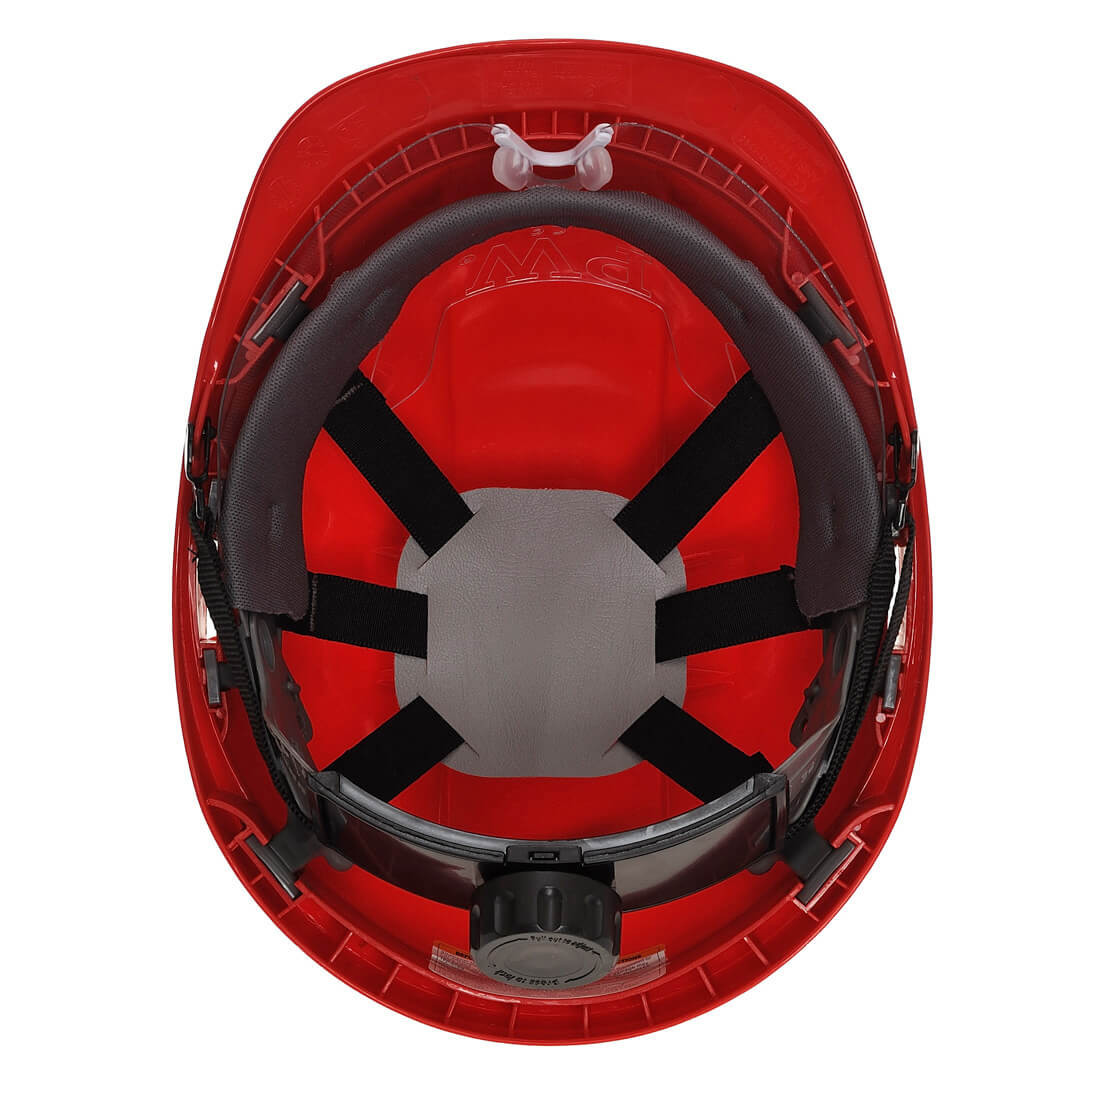 Endurance Plus Helmet (MM) - Personal protection